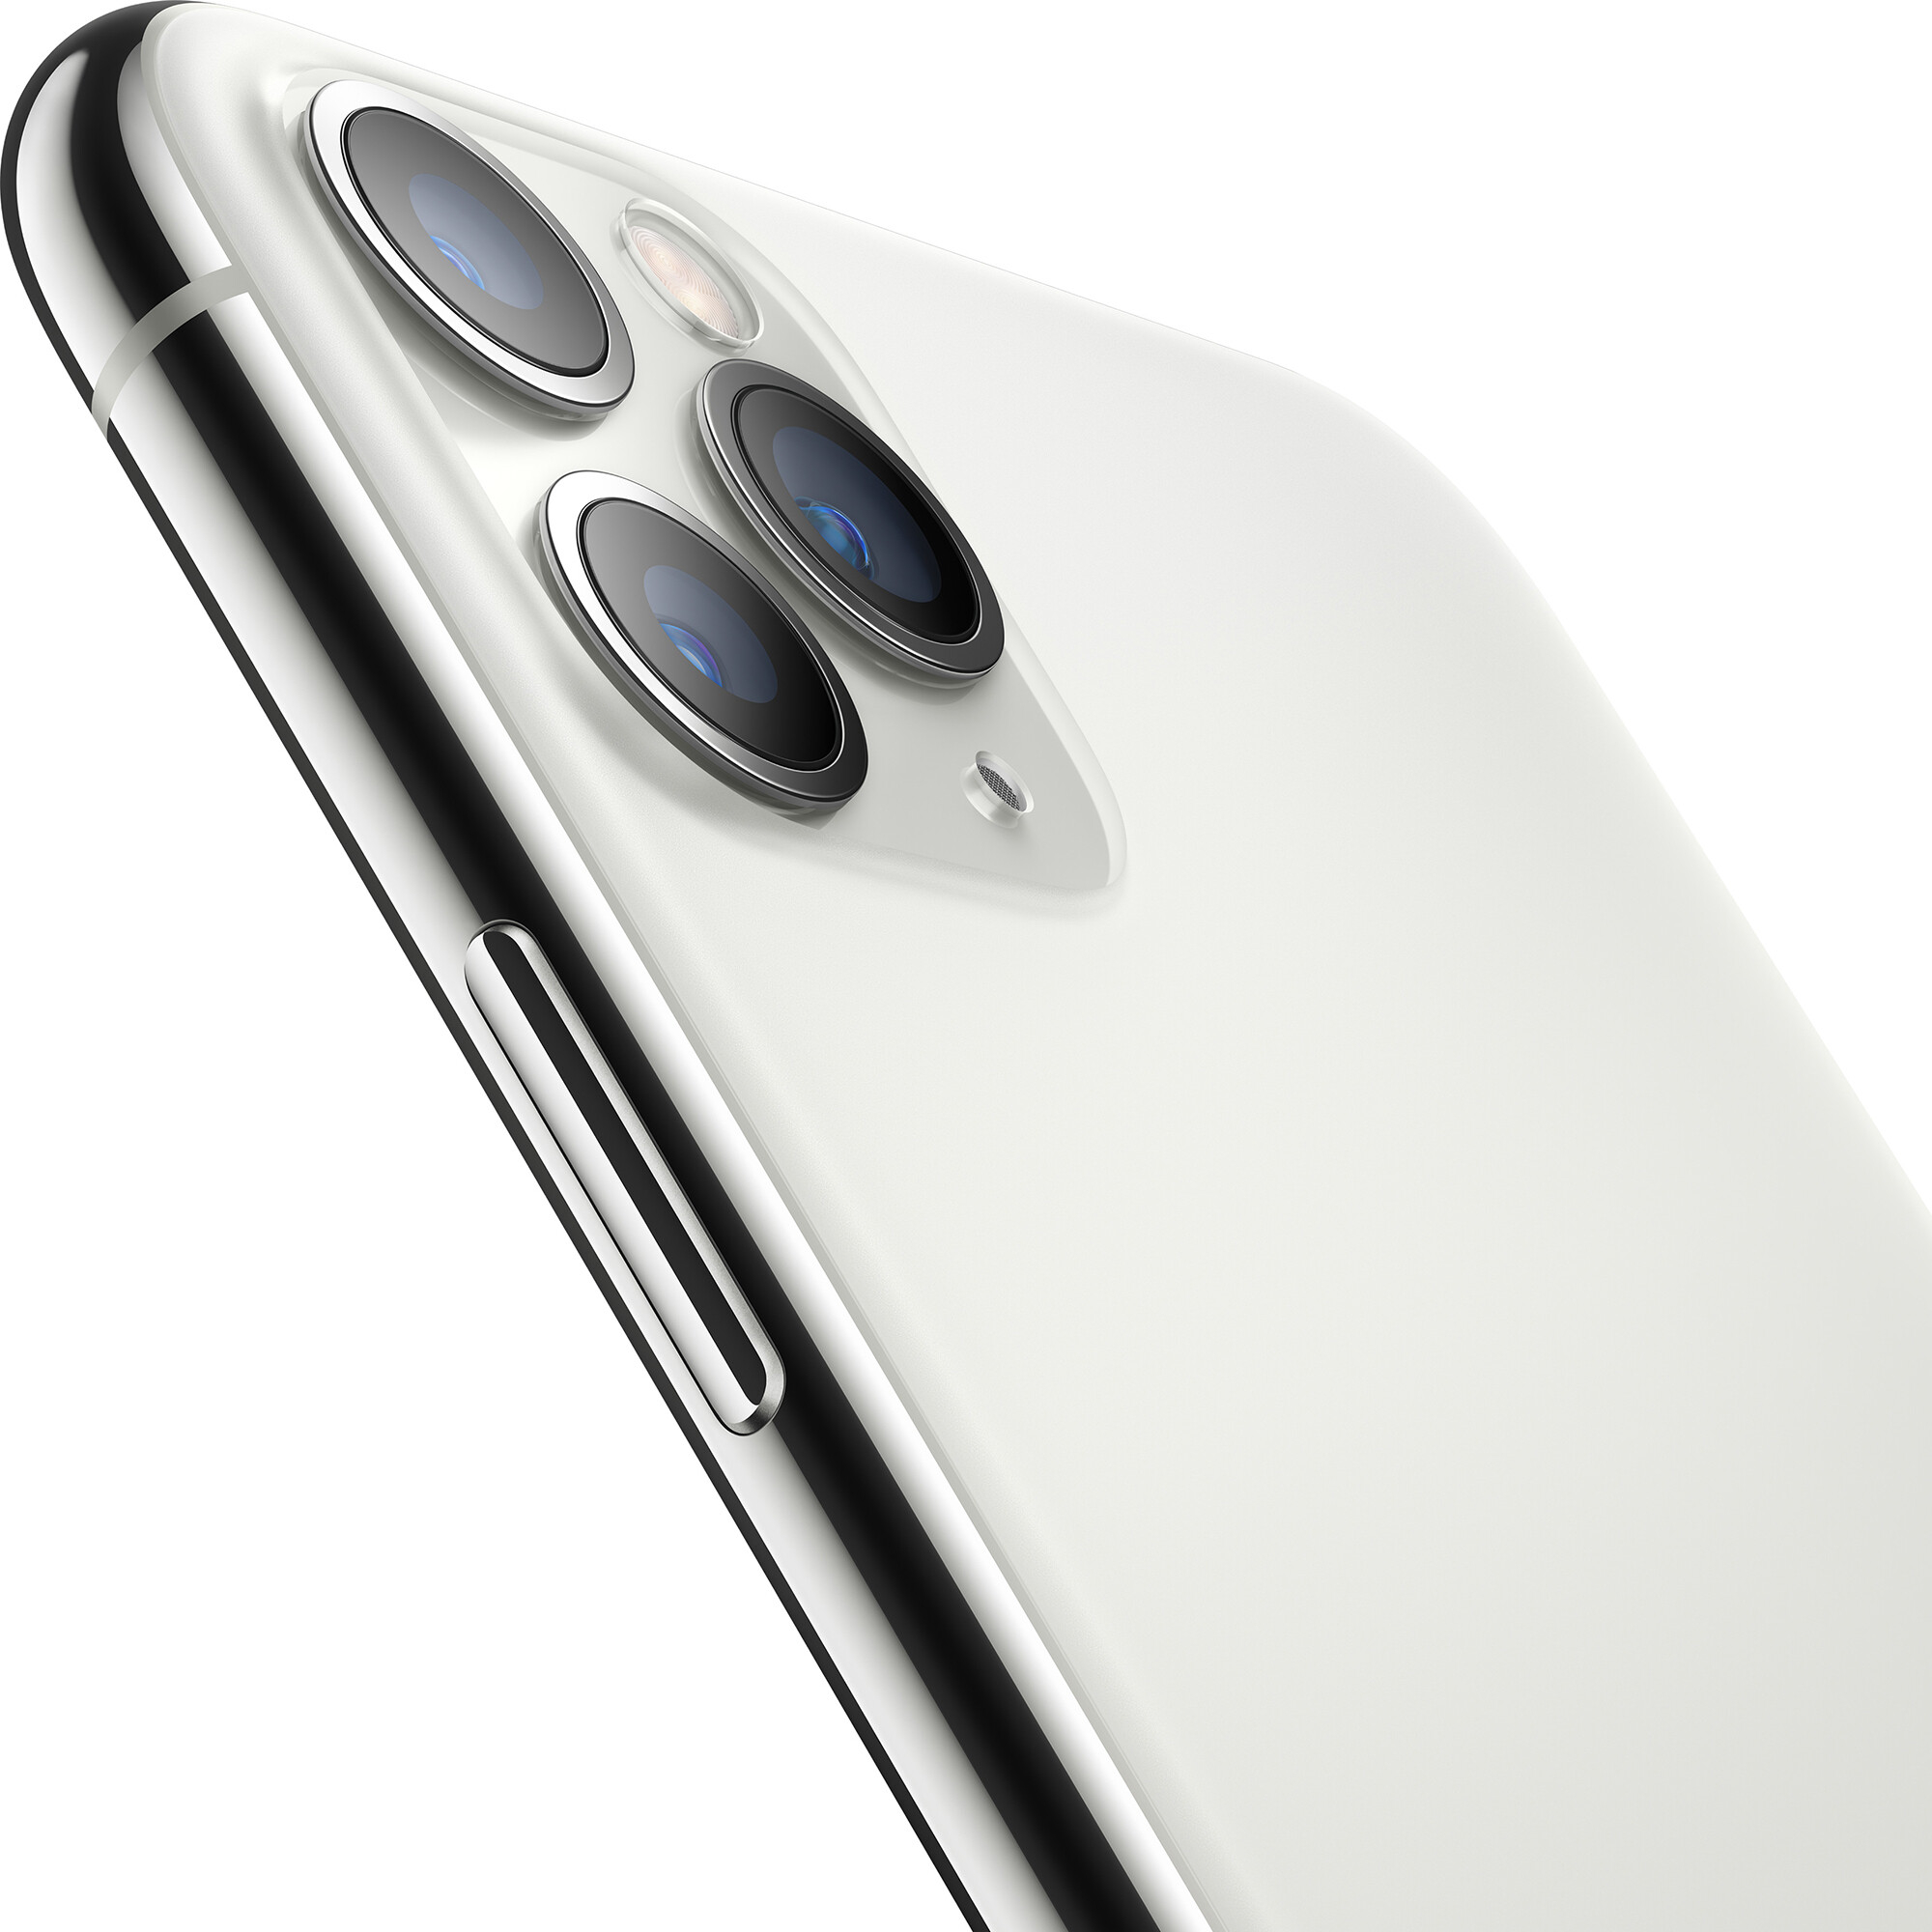  Apple iPhone 11 Pro Max Dual SIM 256GB Silver